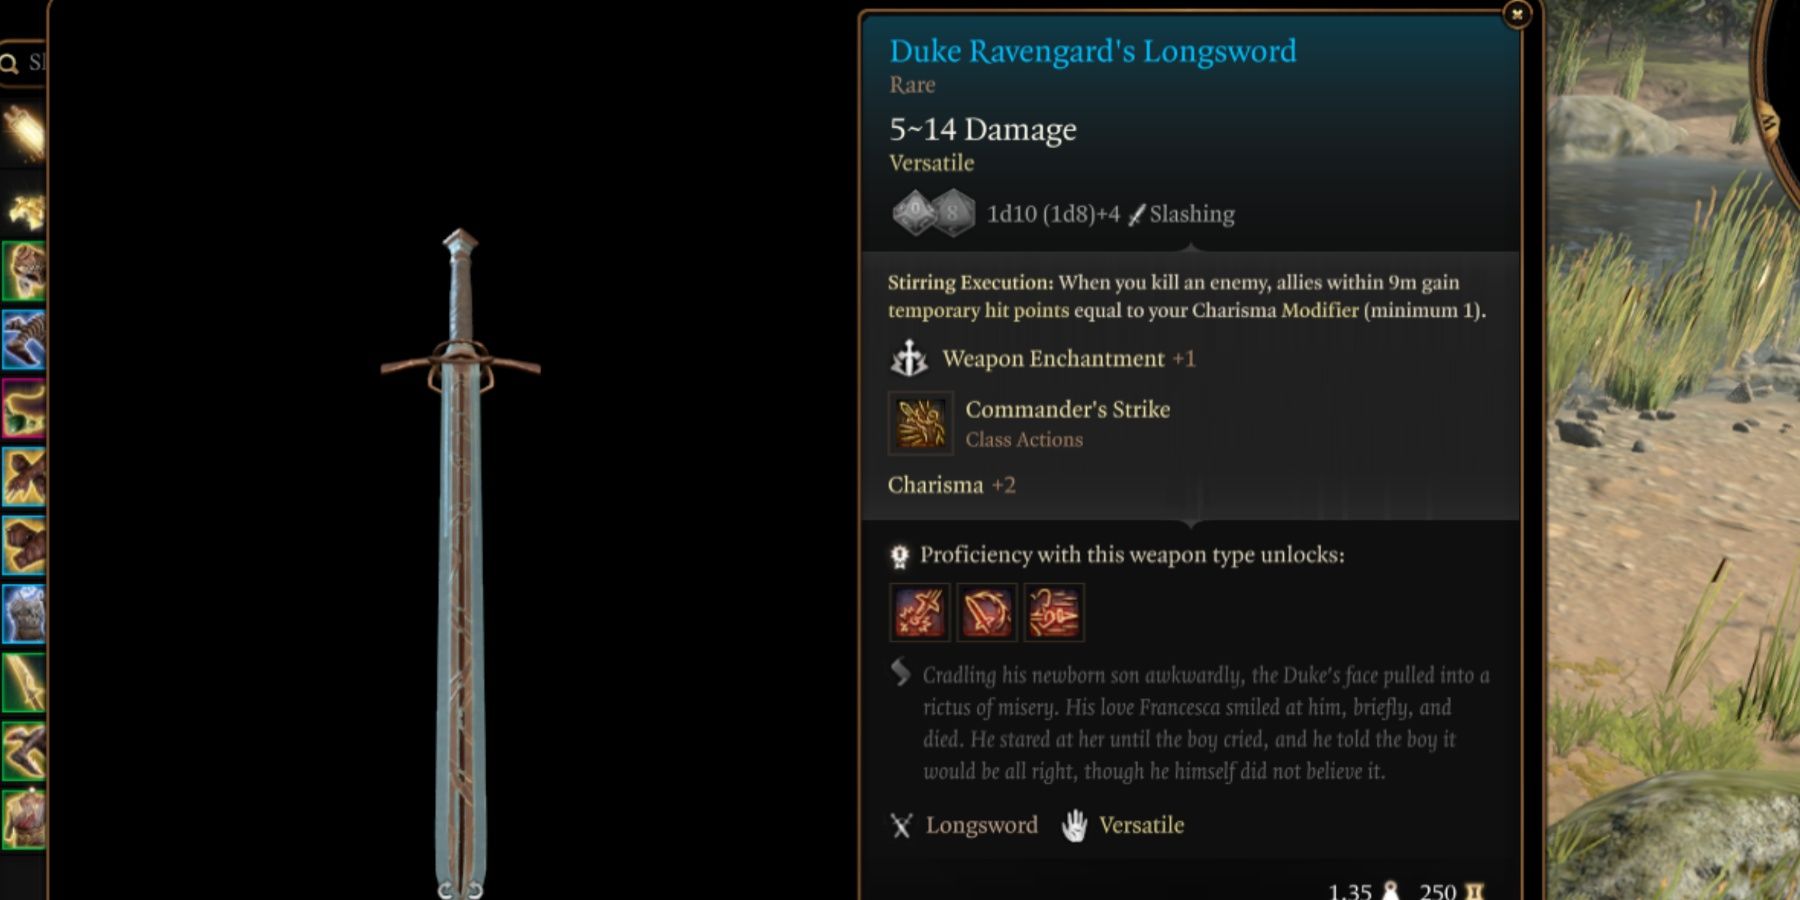 BG3 Duke Ravengard's Longsword in-game item menu description